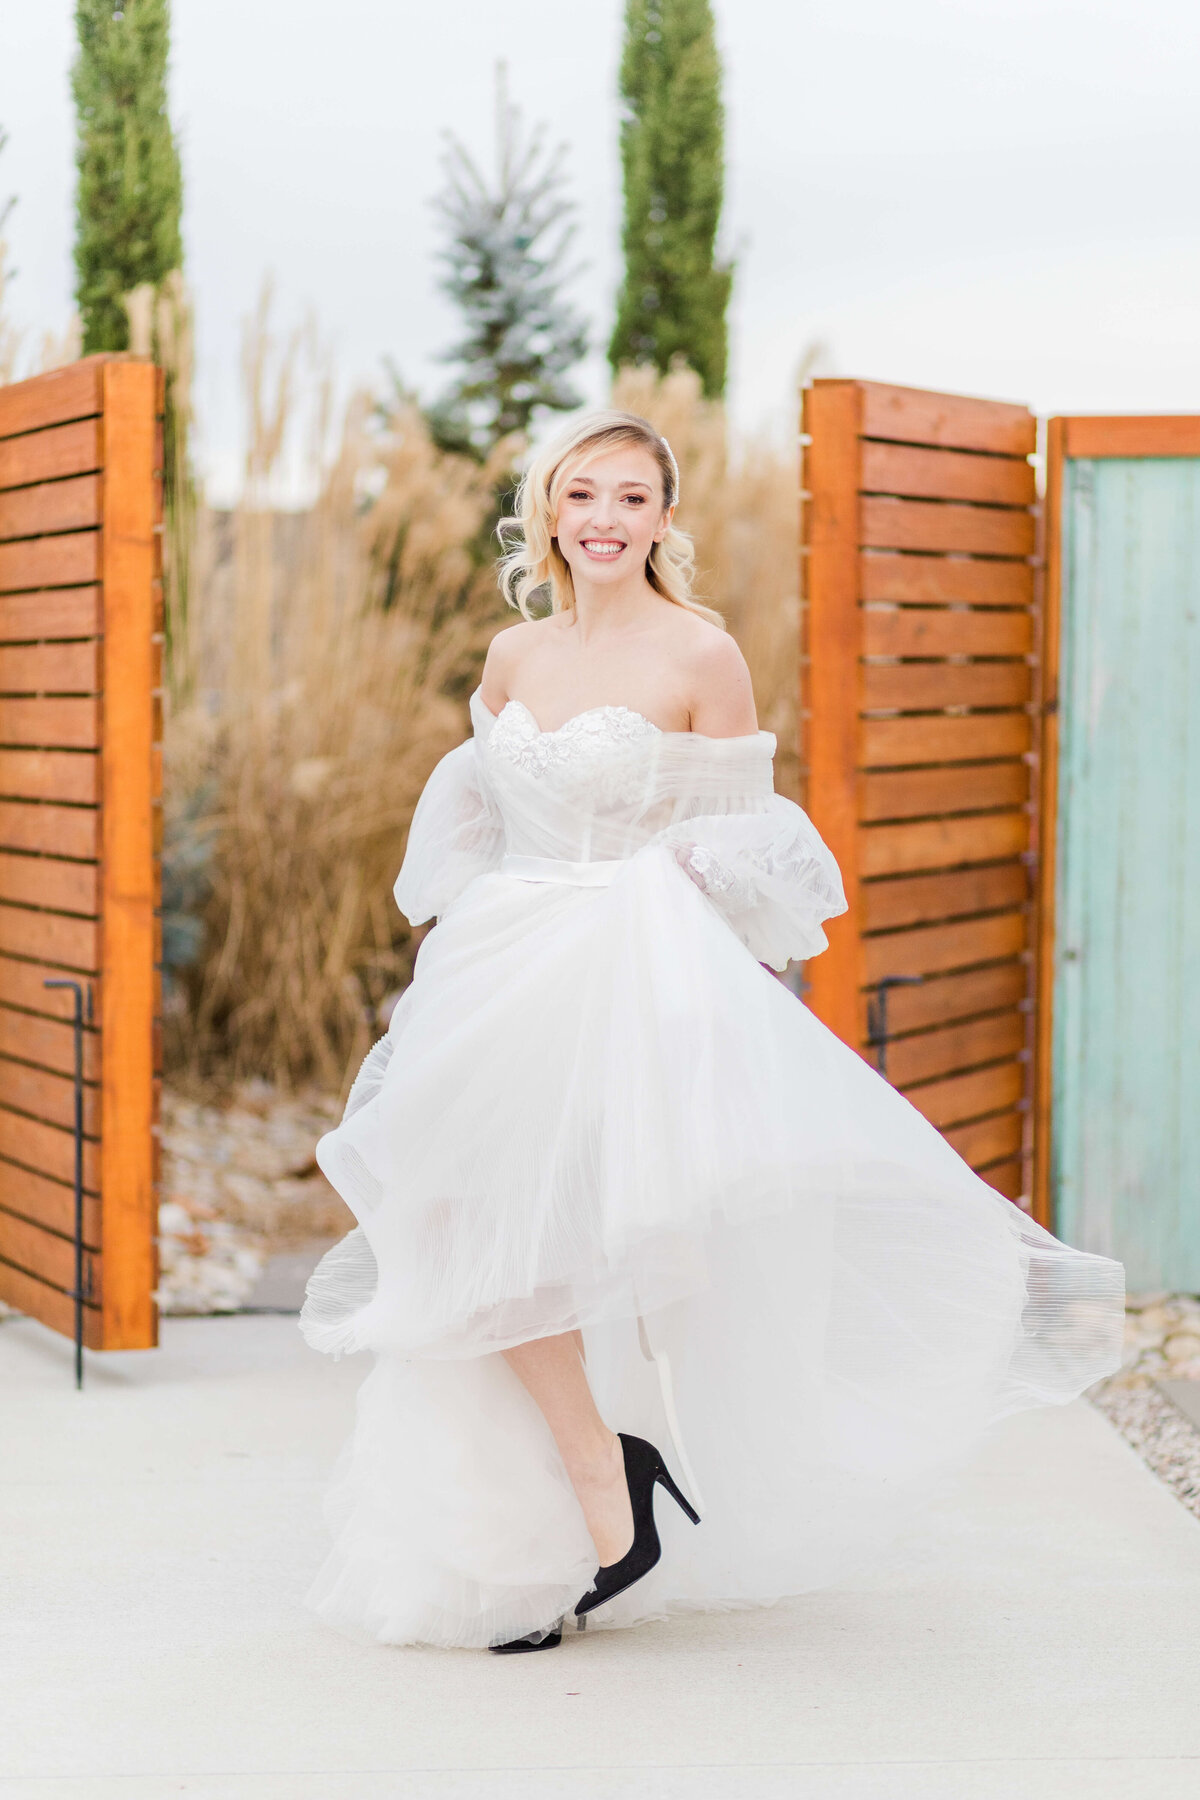 Bride posing outdoors by wood gate